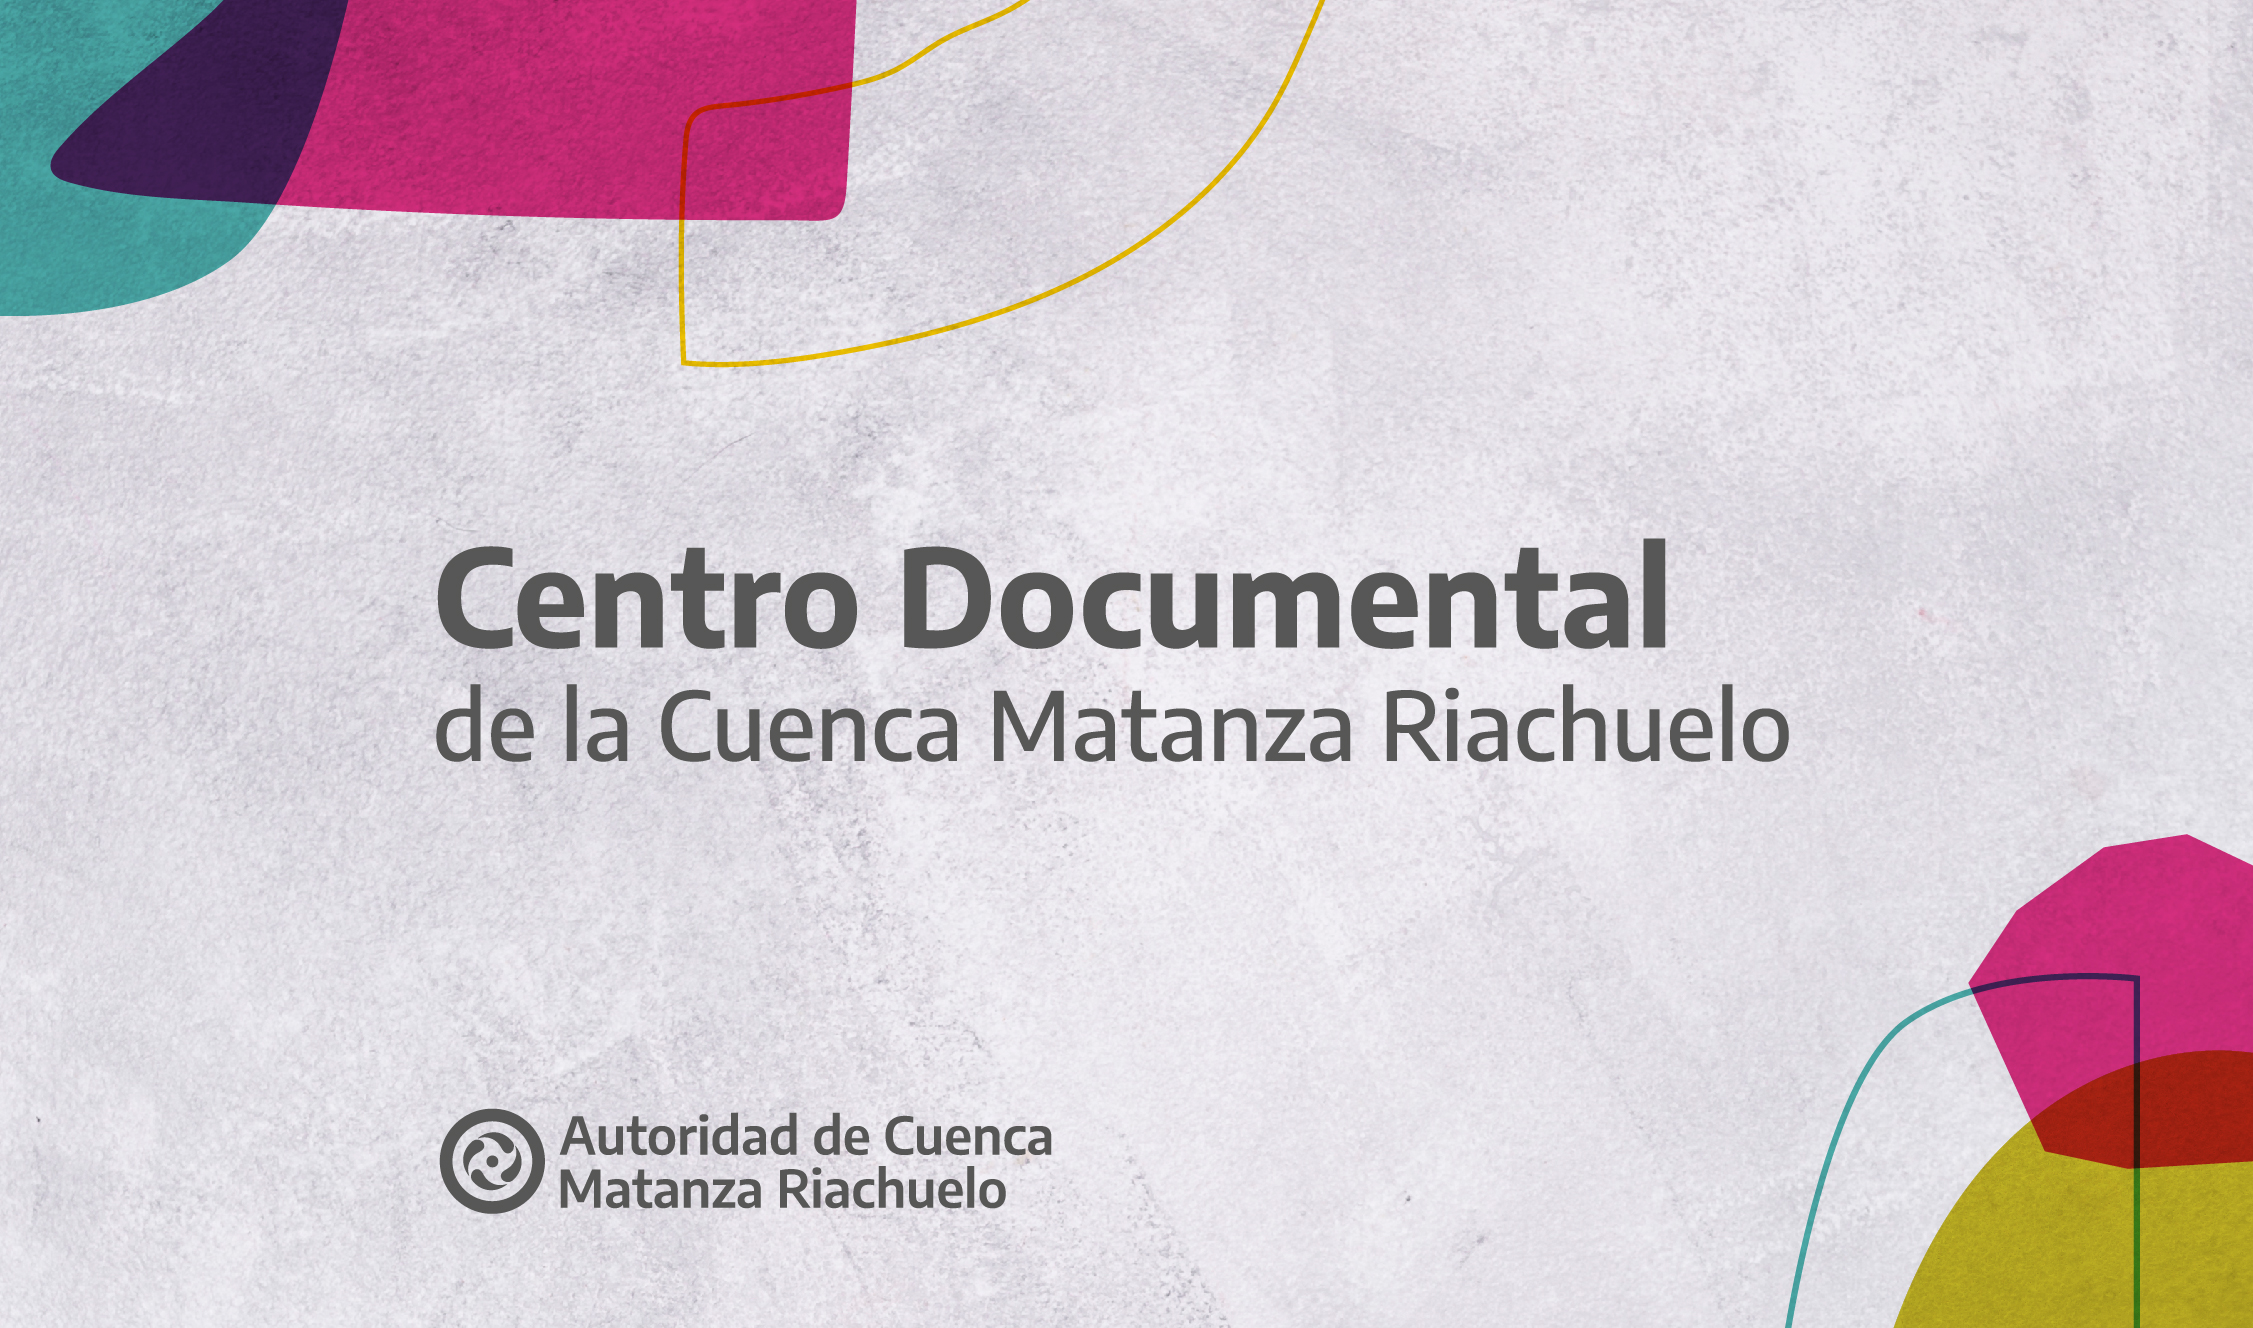 Centro Documental